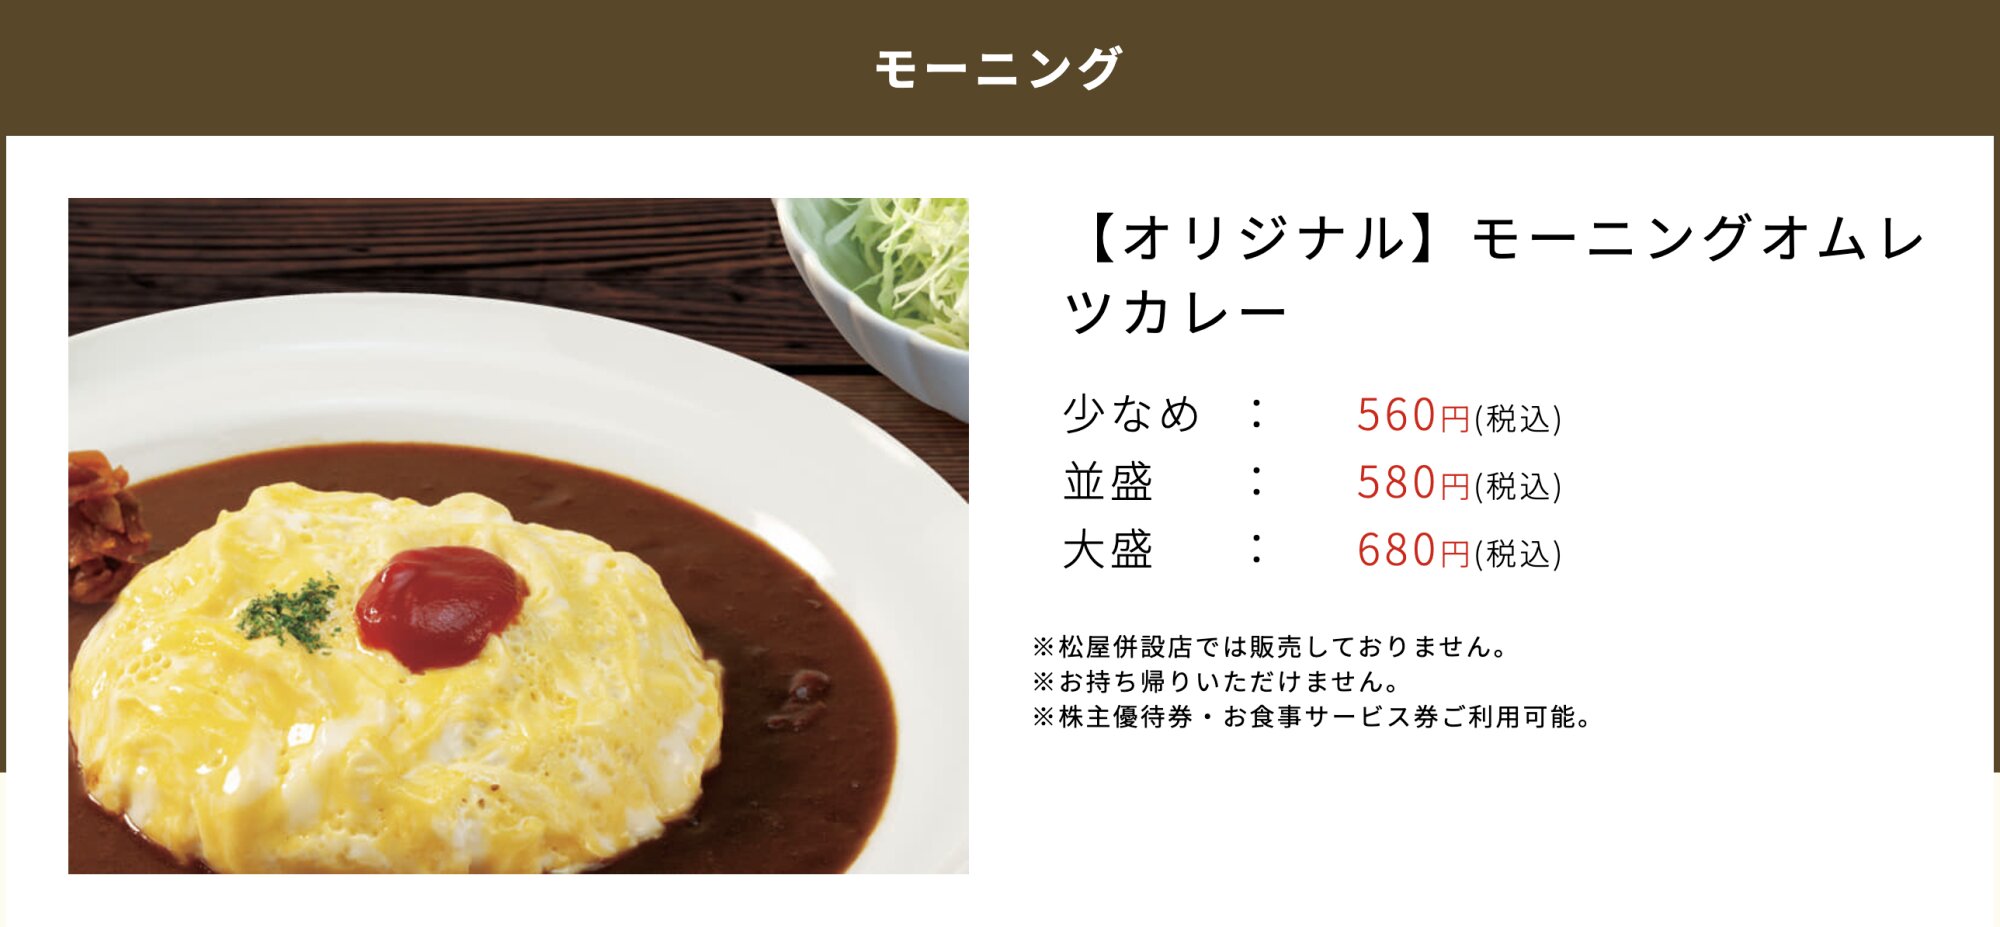 https://www.matsuyafoods.co.jp/mycurry/menu/morning/ad_morning_omu_ori_hp_231101.html